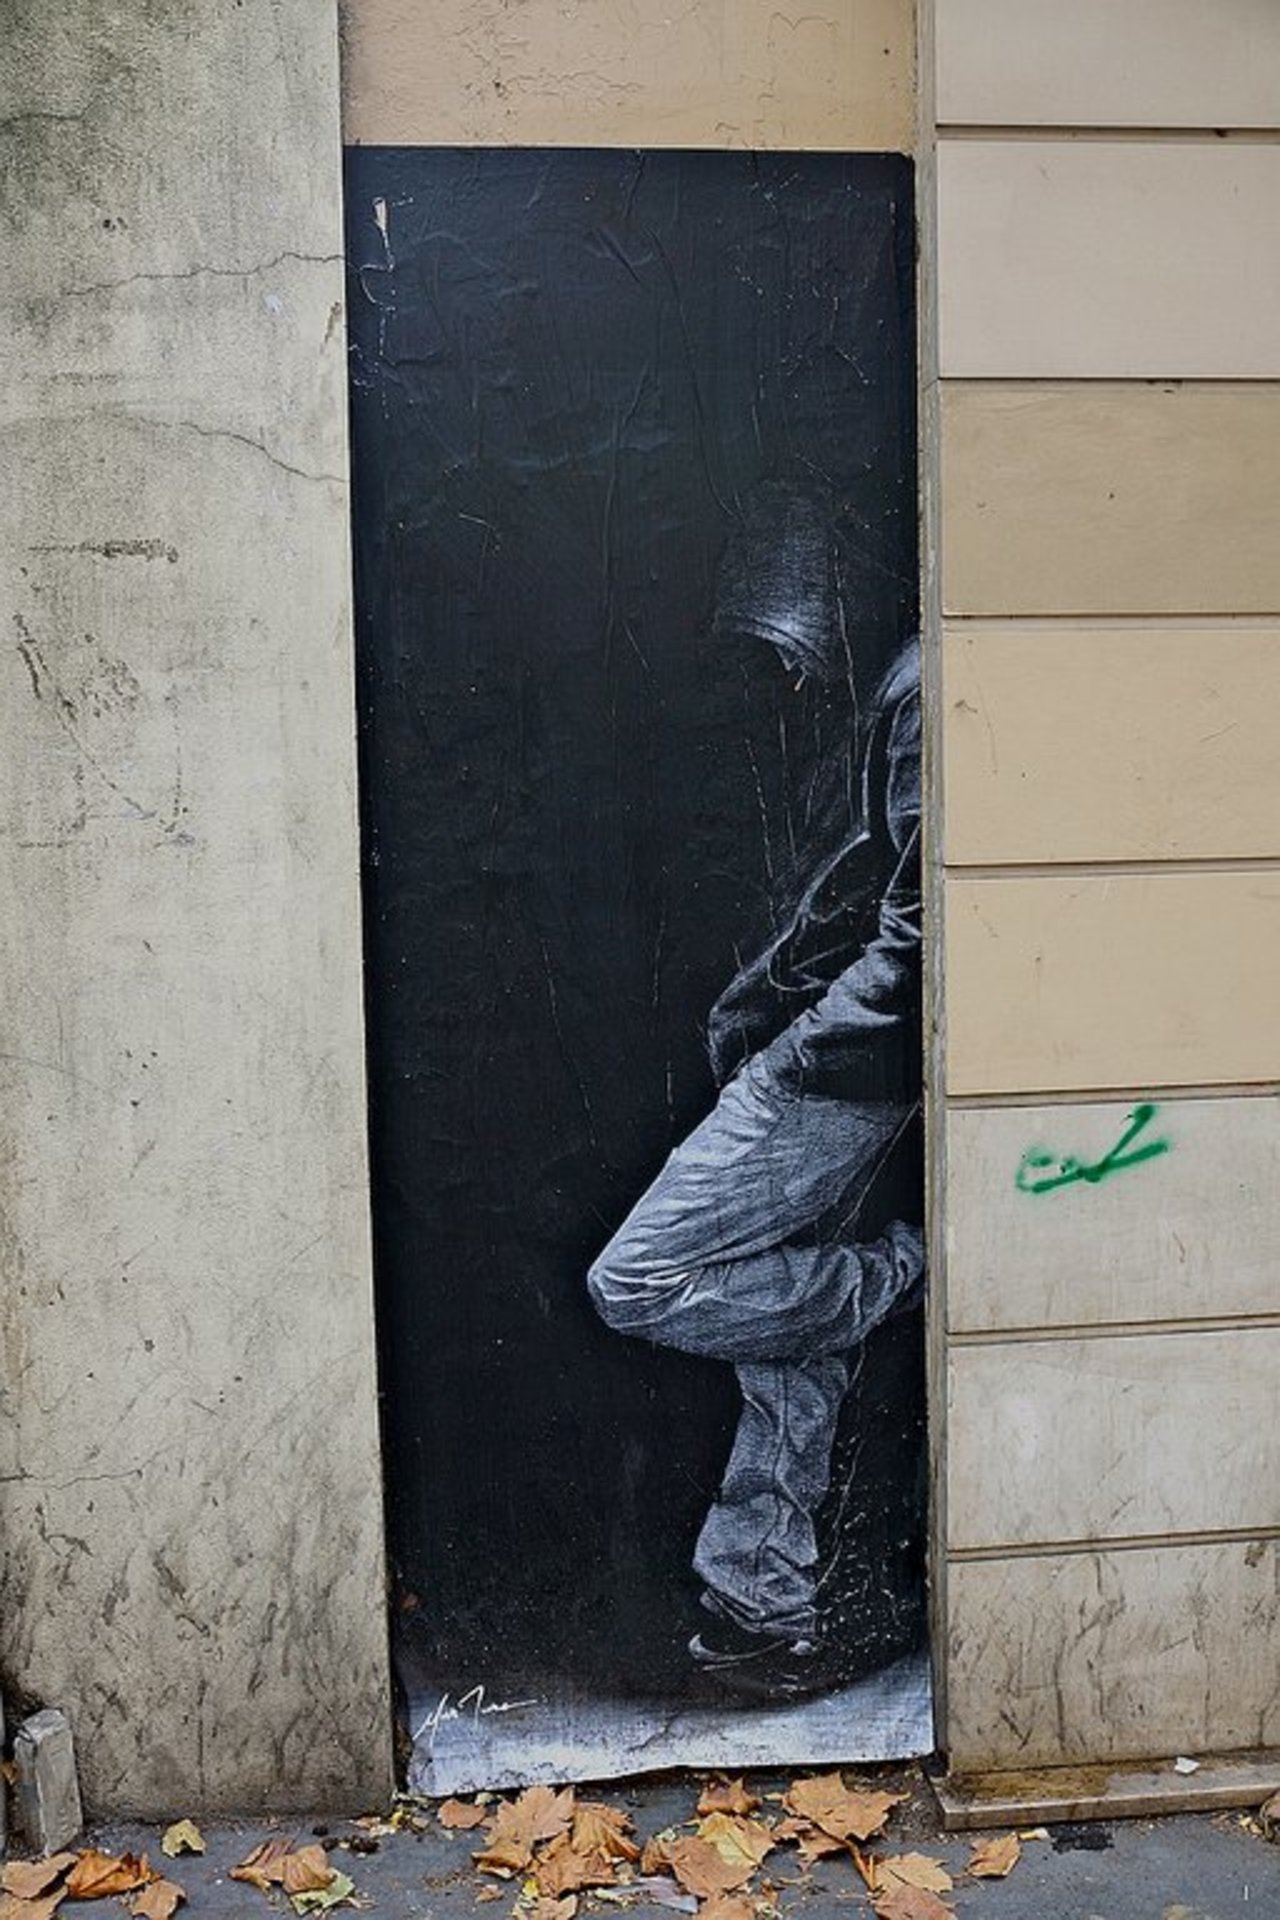 Street Art by anonymous in #Paris http://www.urbacolors.com #art #mural #graffiti #streetart https://t.co/BdPHk4AHN4